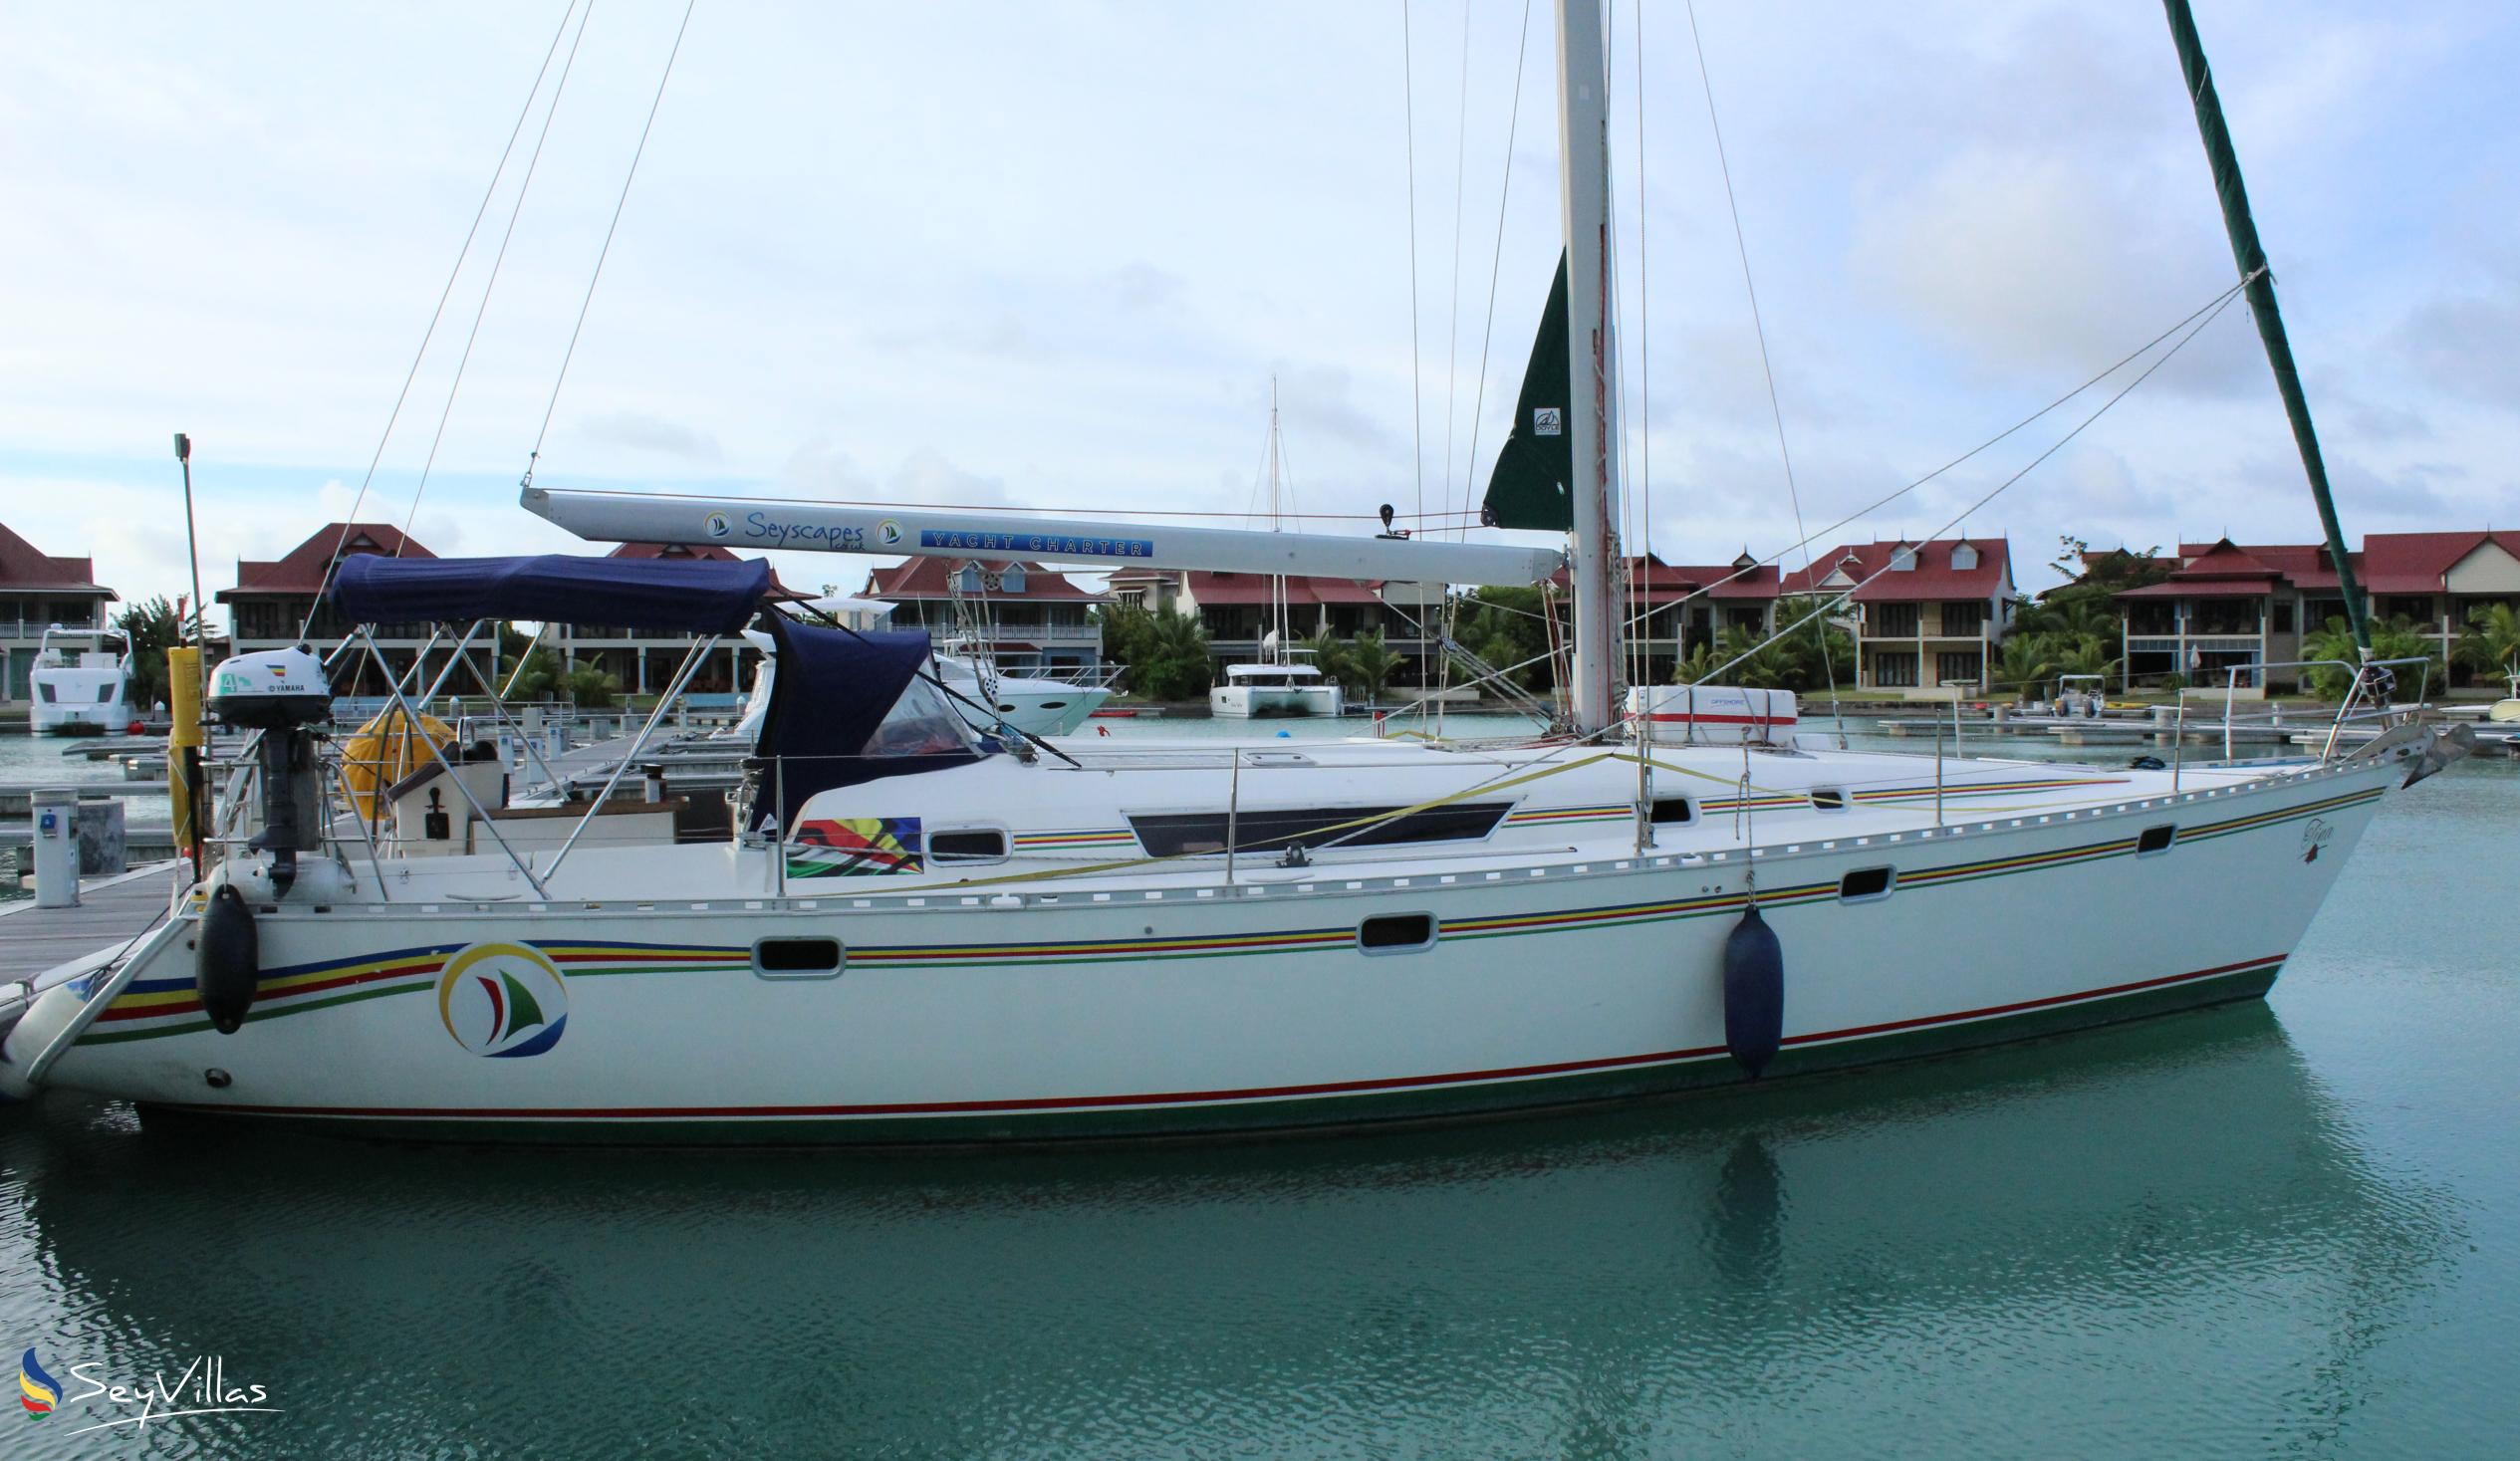 Foto 8: Seyscapes Yacht Charter - Aussenbereich - Seychellen (Seychellen)